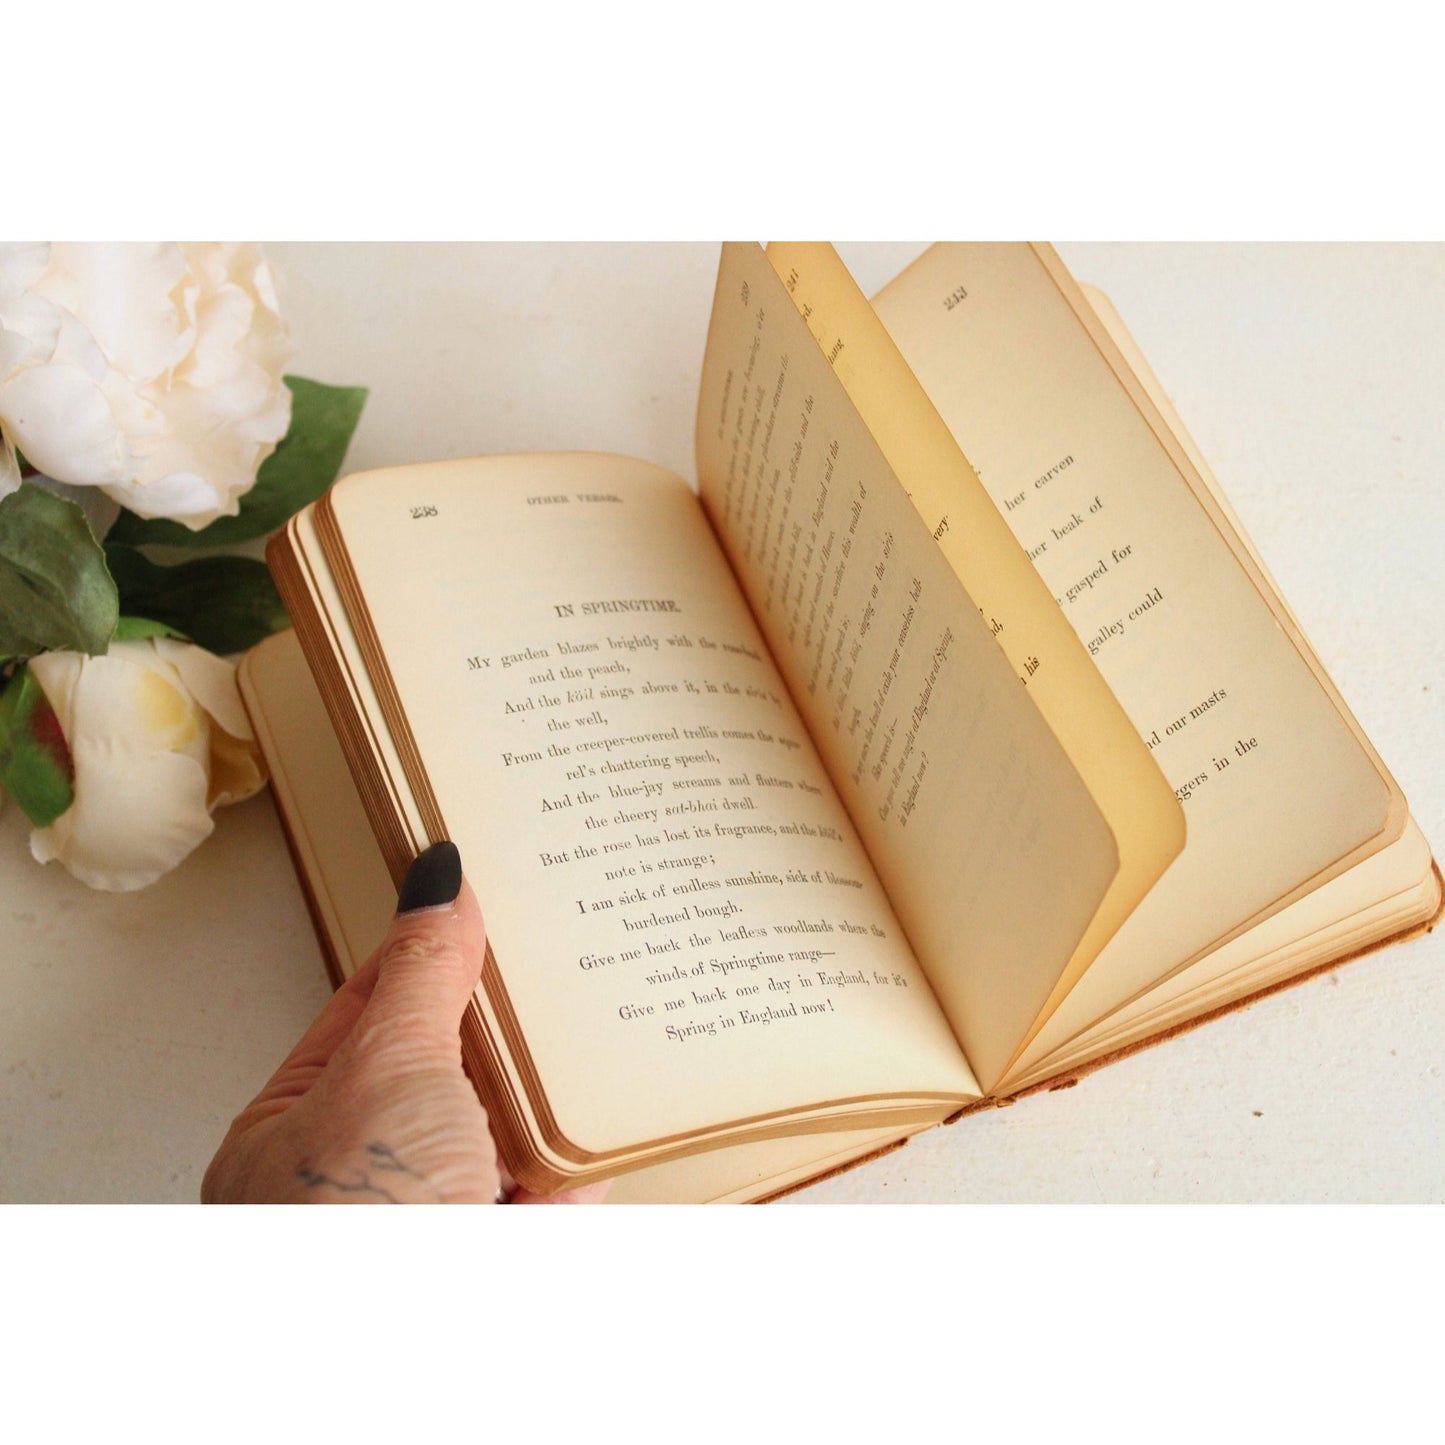 Vintage Antique 1920s Book, "The Poems of Rudyard Kipling"